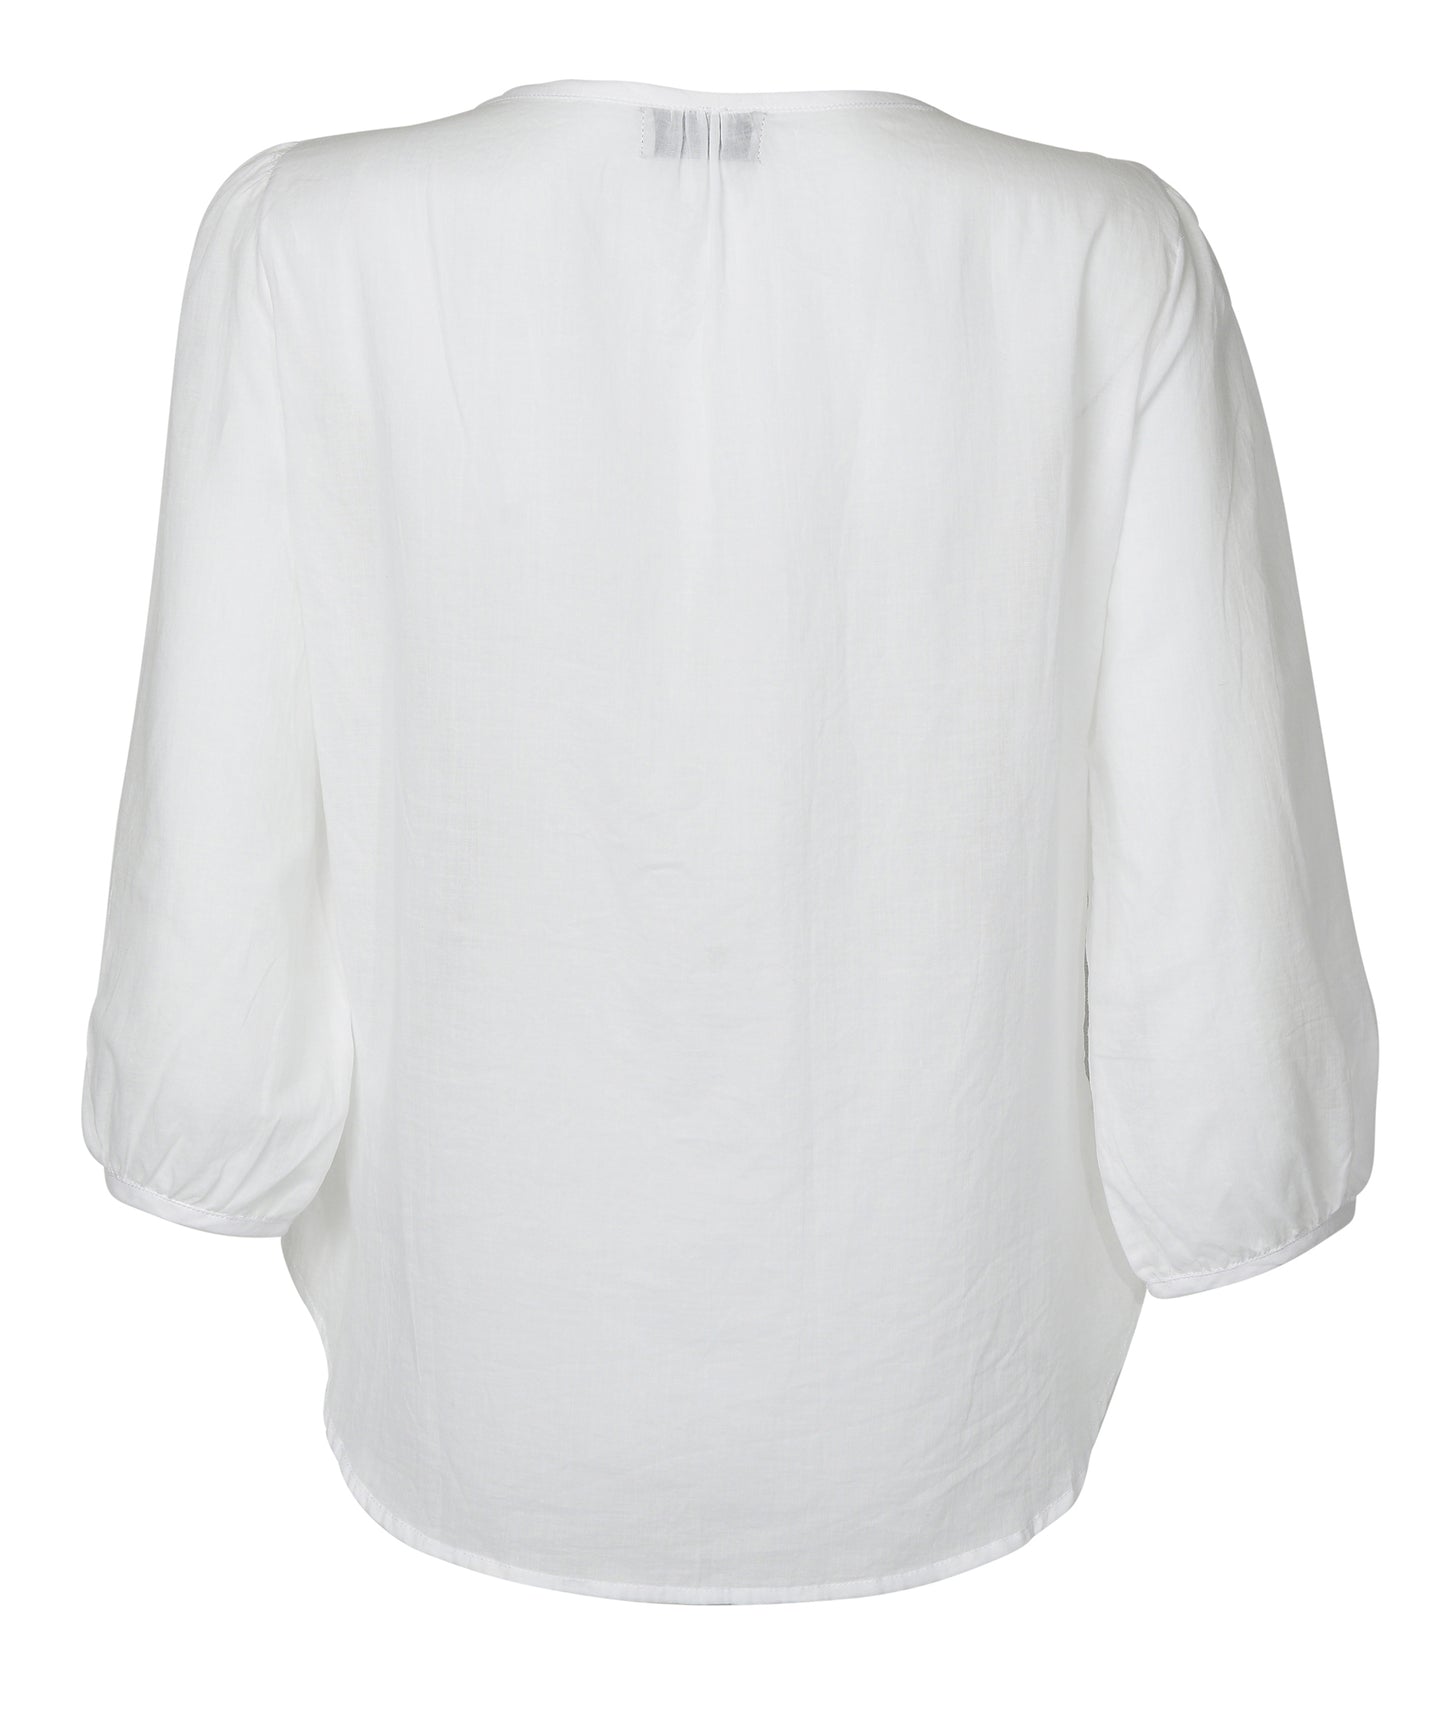 Women's white cotton pintuck shirt | 100% Cotton | Donnah